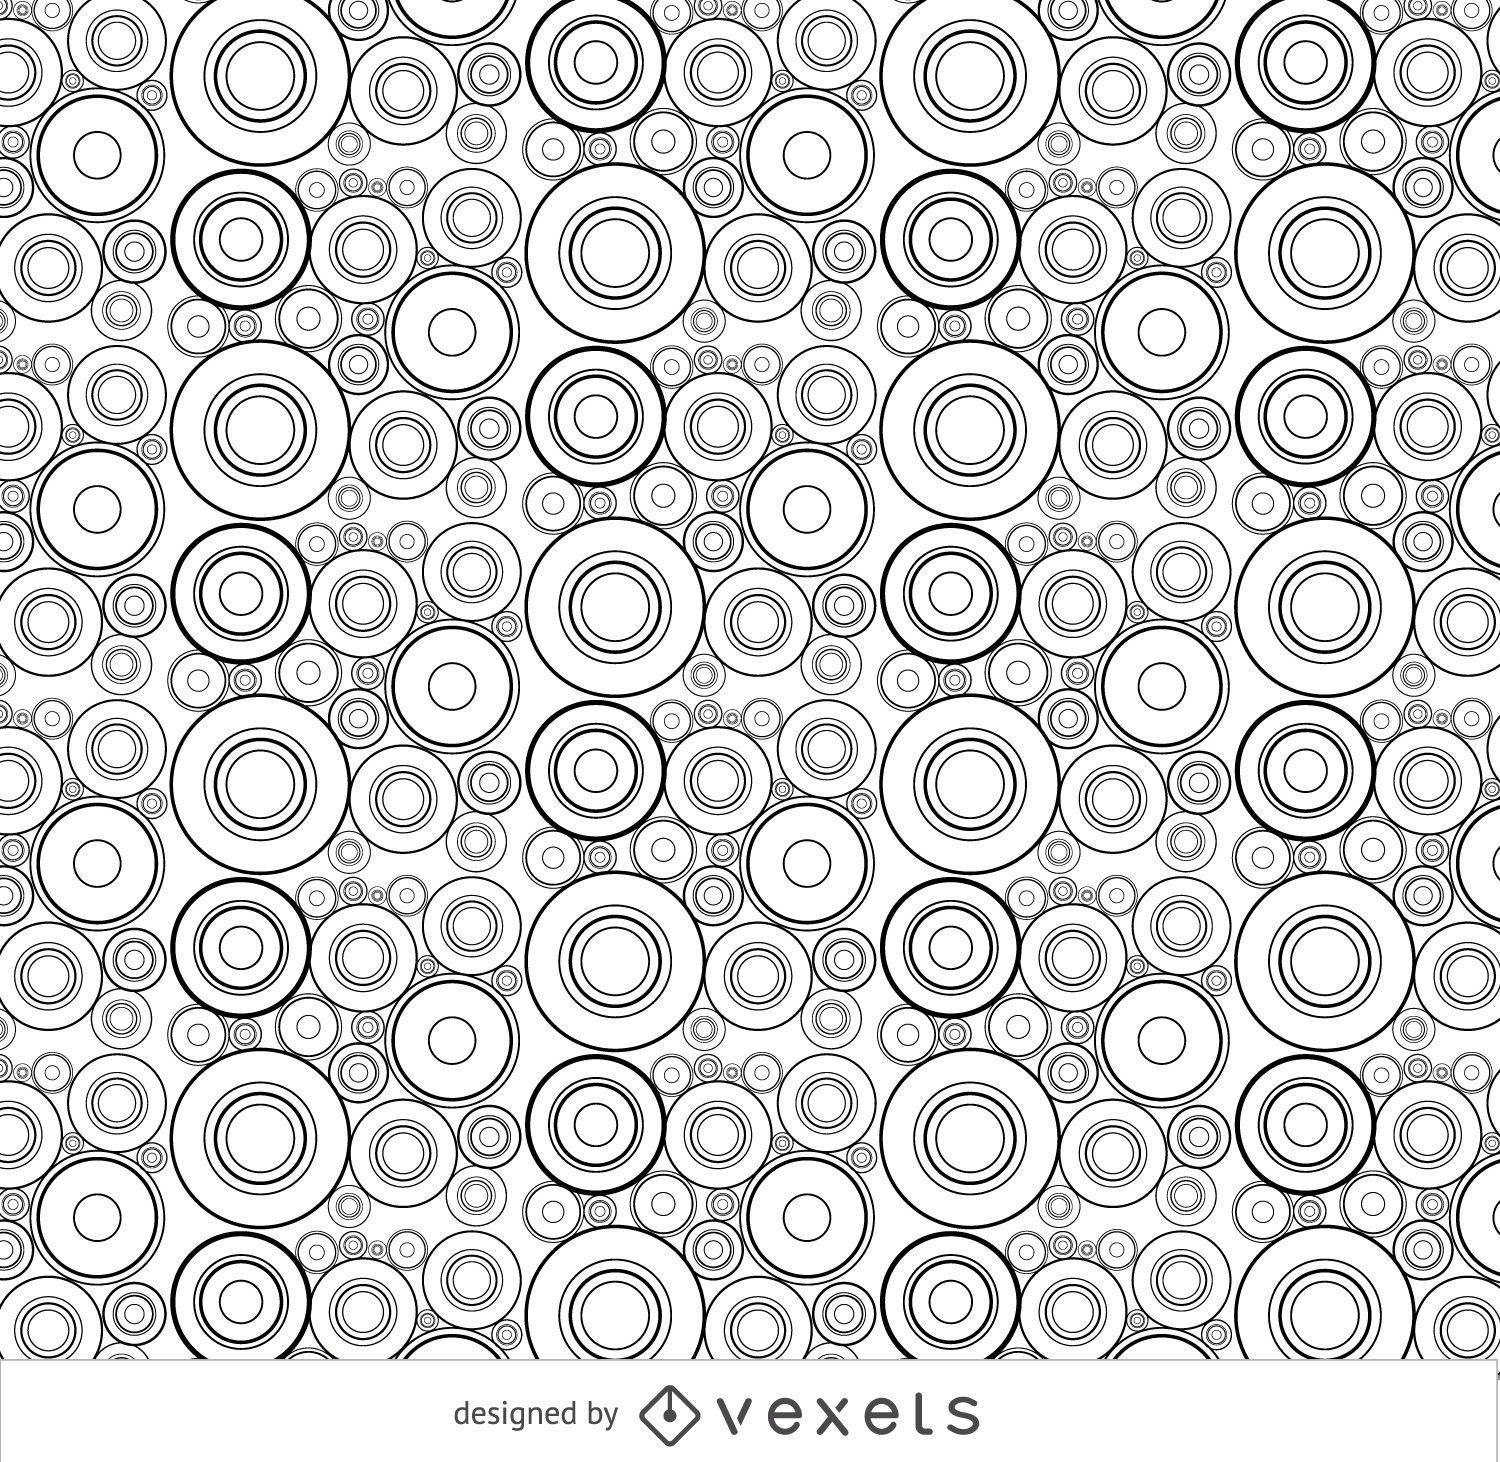 Abstract circle seamless pattern